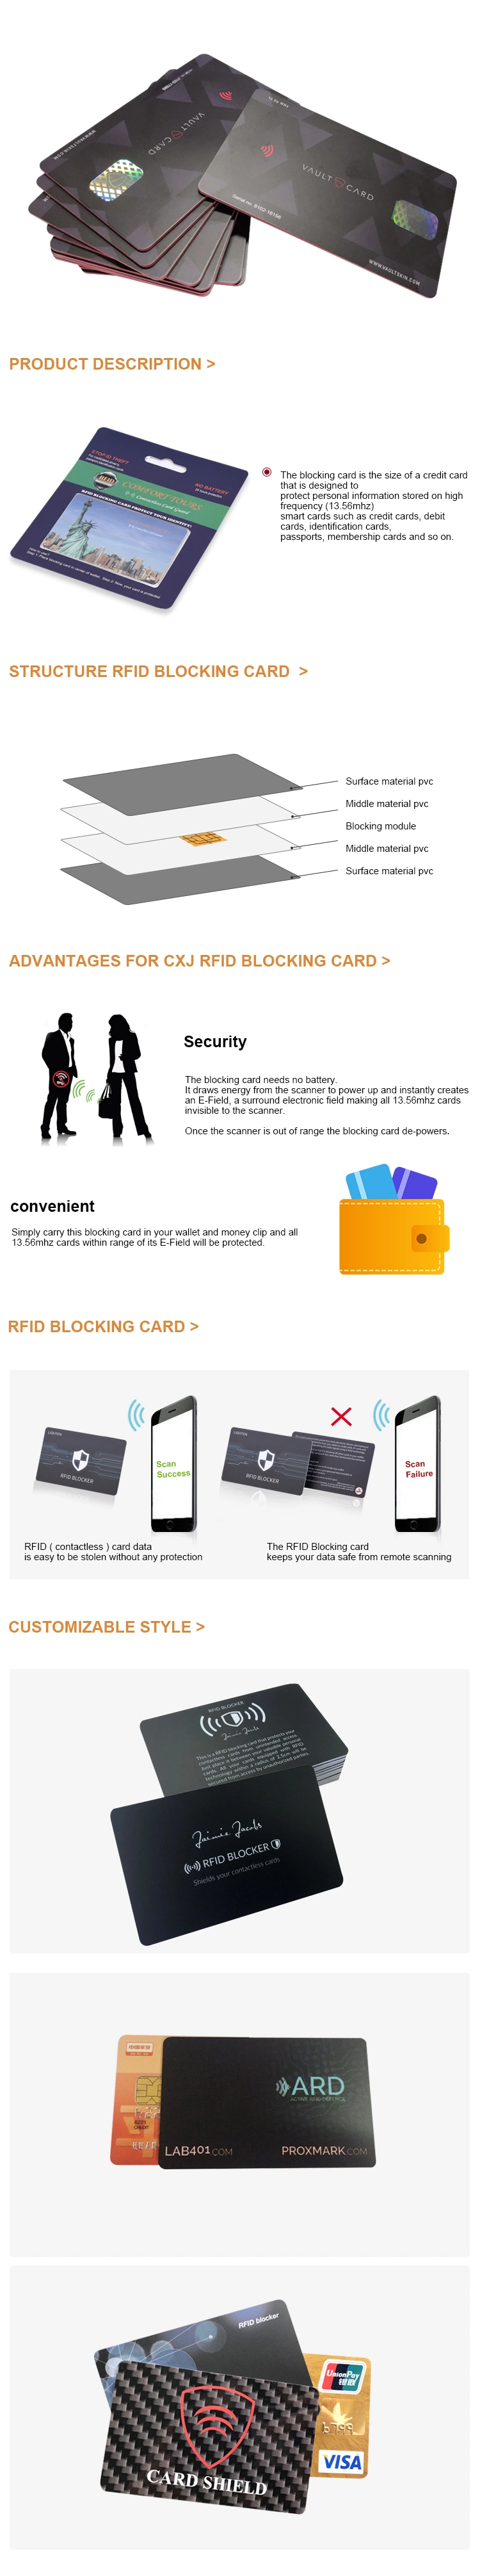 Credit  Card  Protector  RFID  Blocking  Card  Scan  Blocker